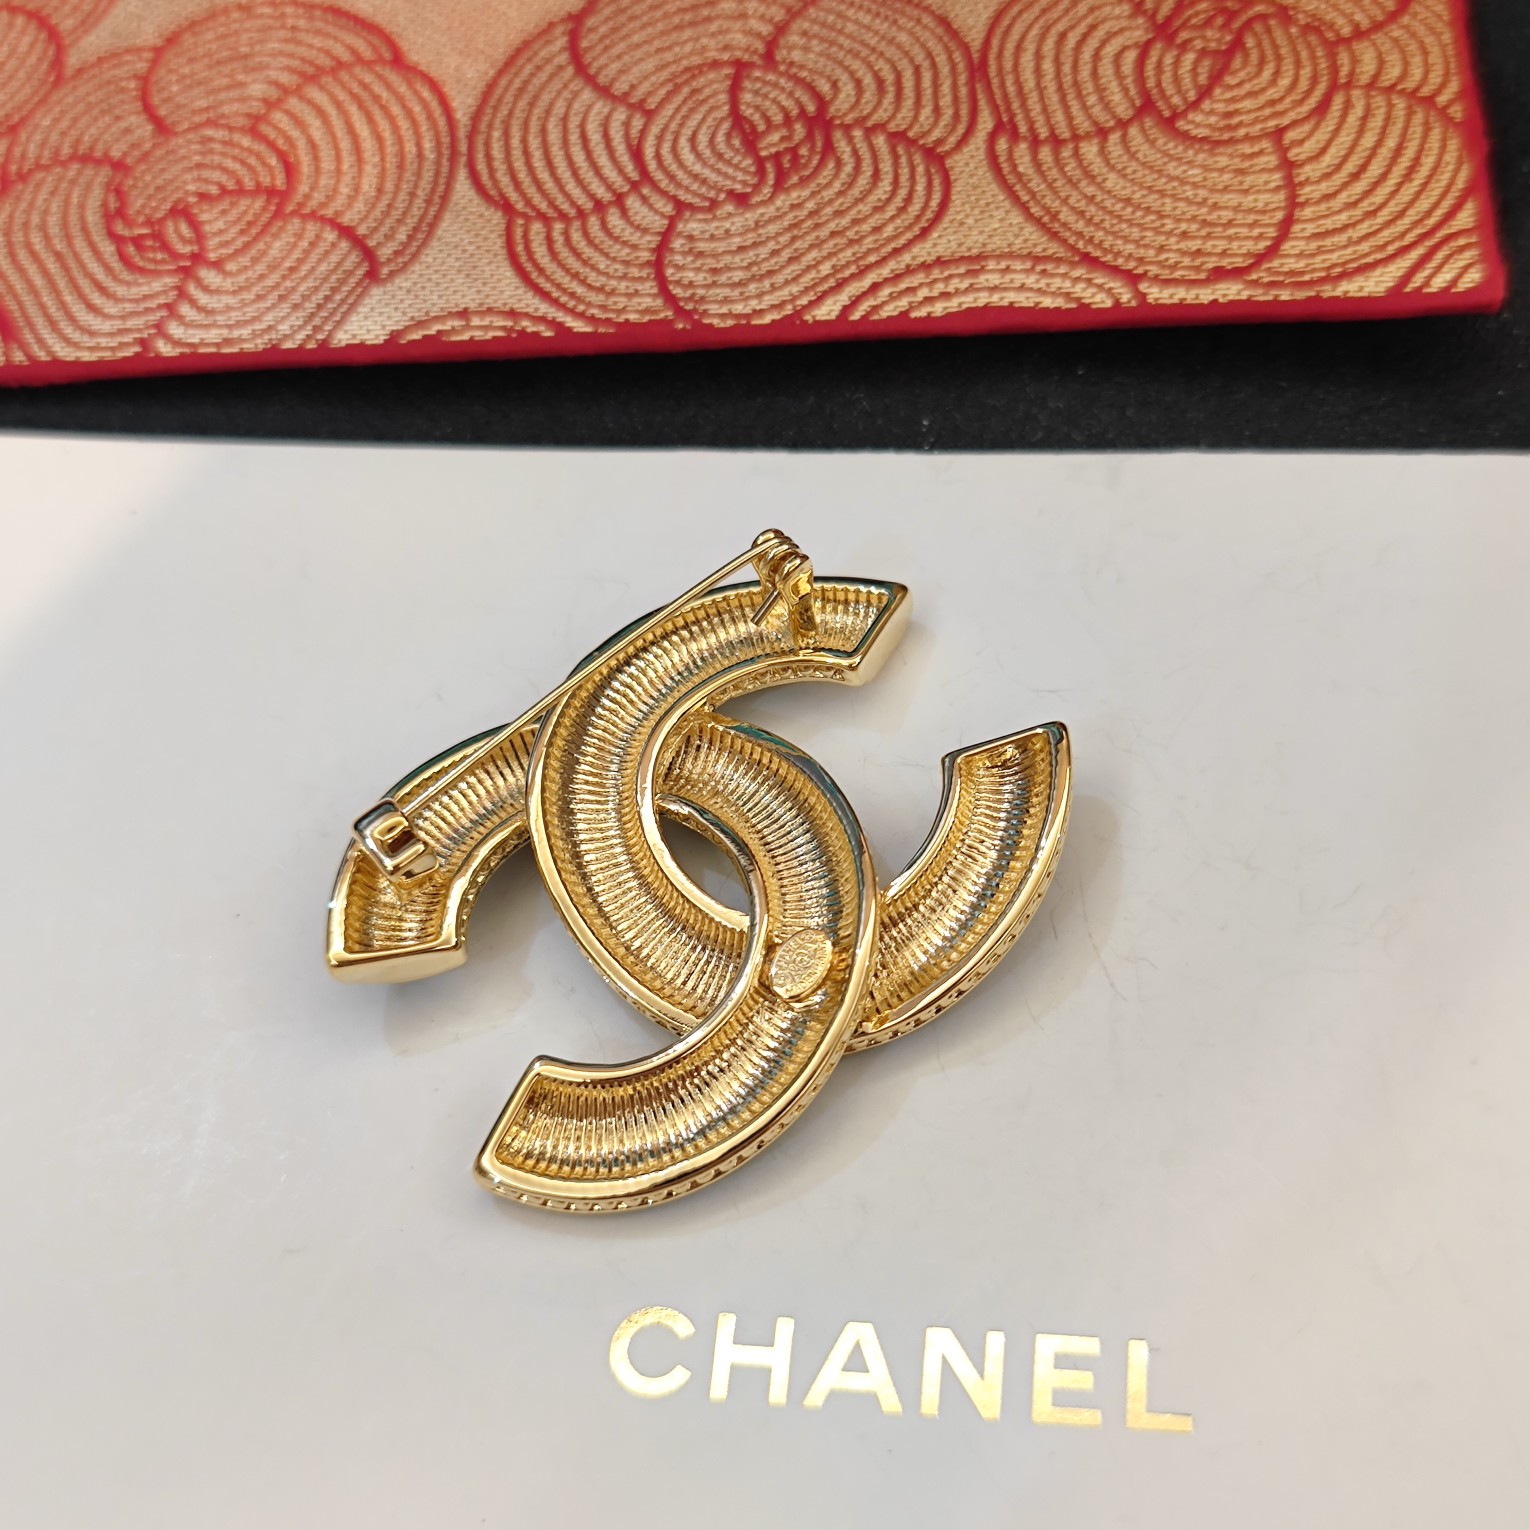 C266 Chanel brooch